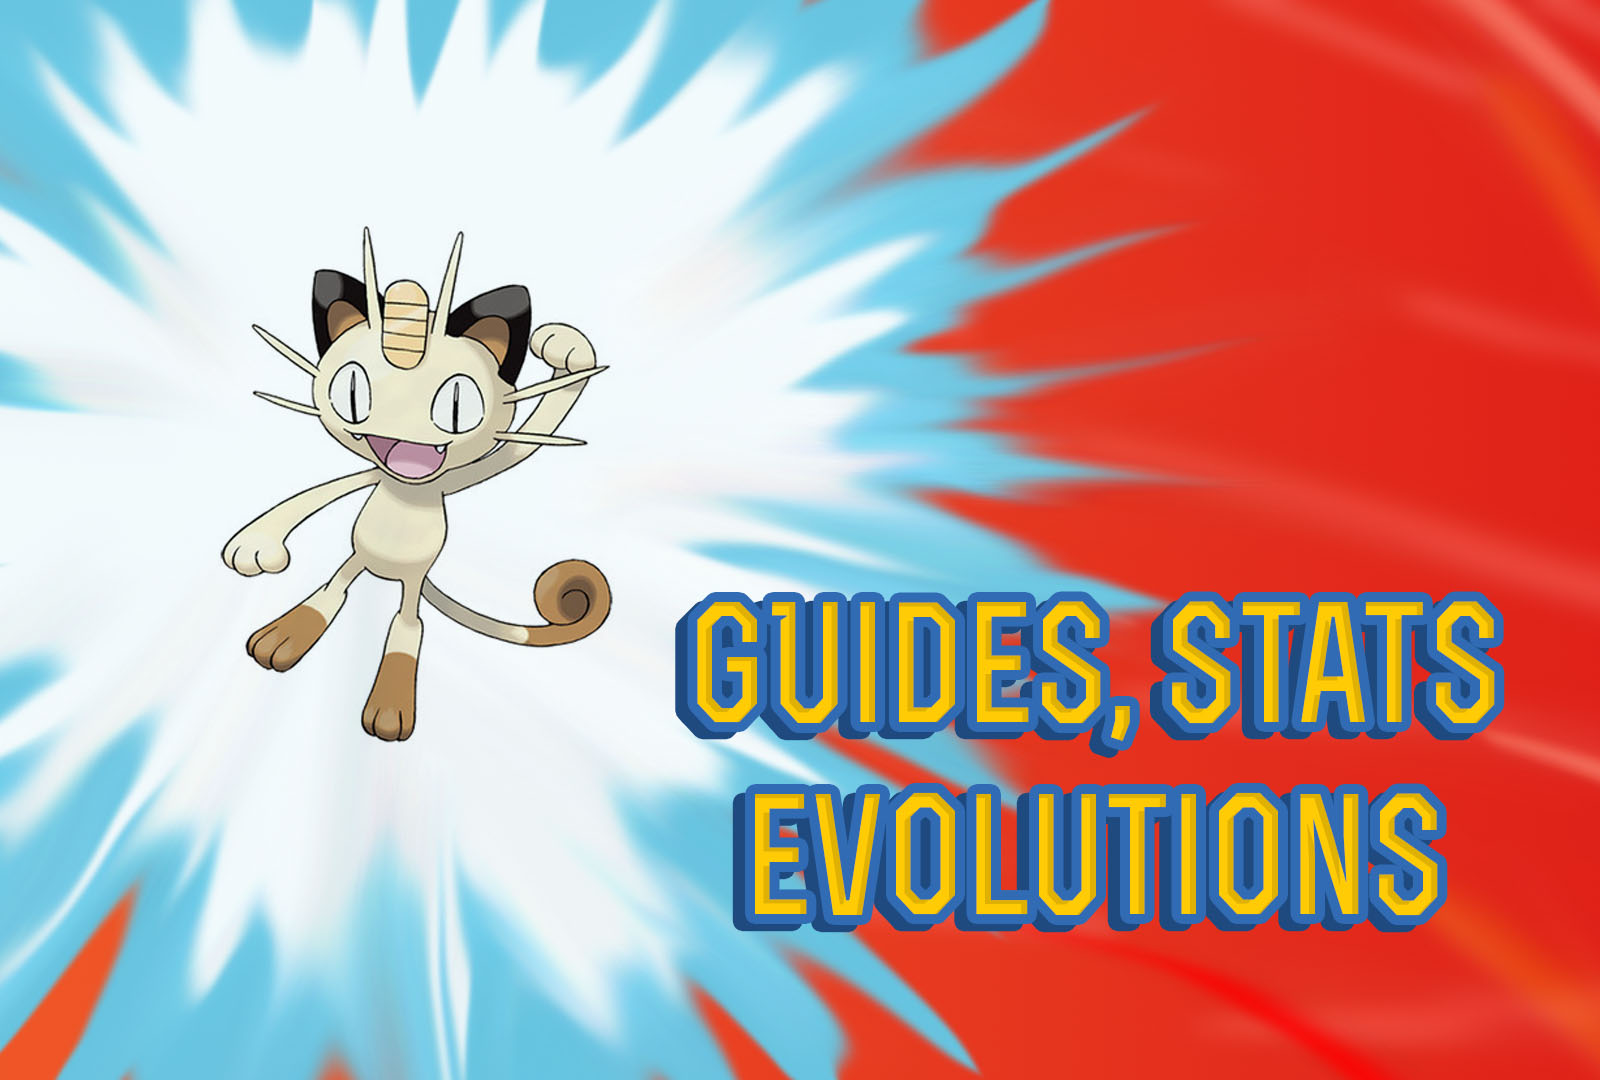 Pokemon Let's Go Meowth Guide, Stats & Evolutions